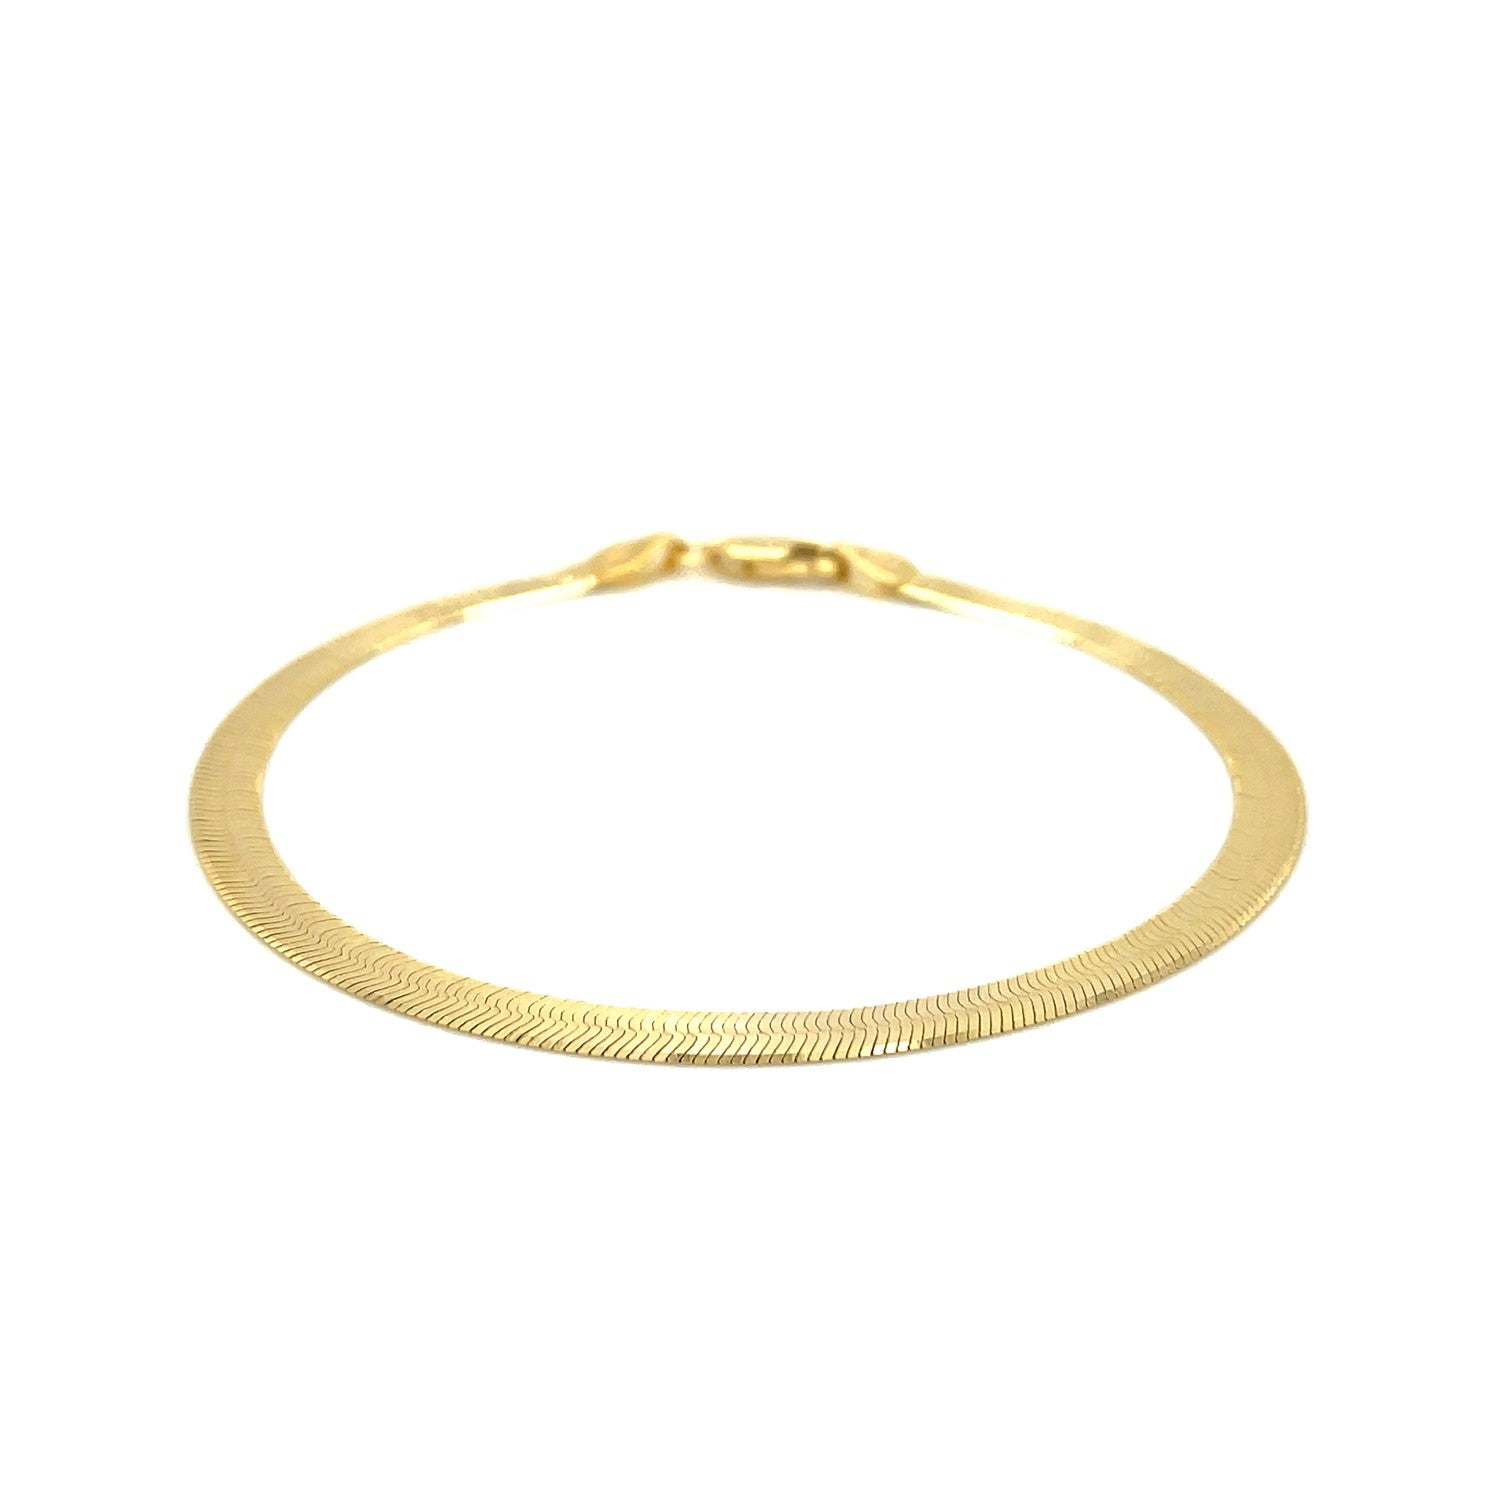 4.0mm 14k Yellow Gold Super Flex Herringbone Bracelet